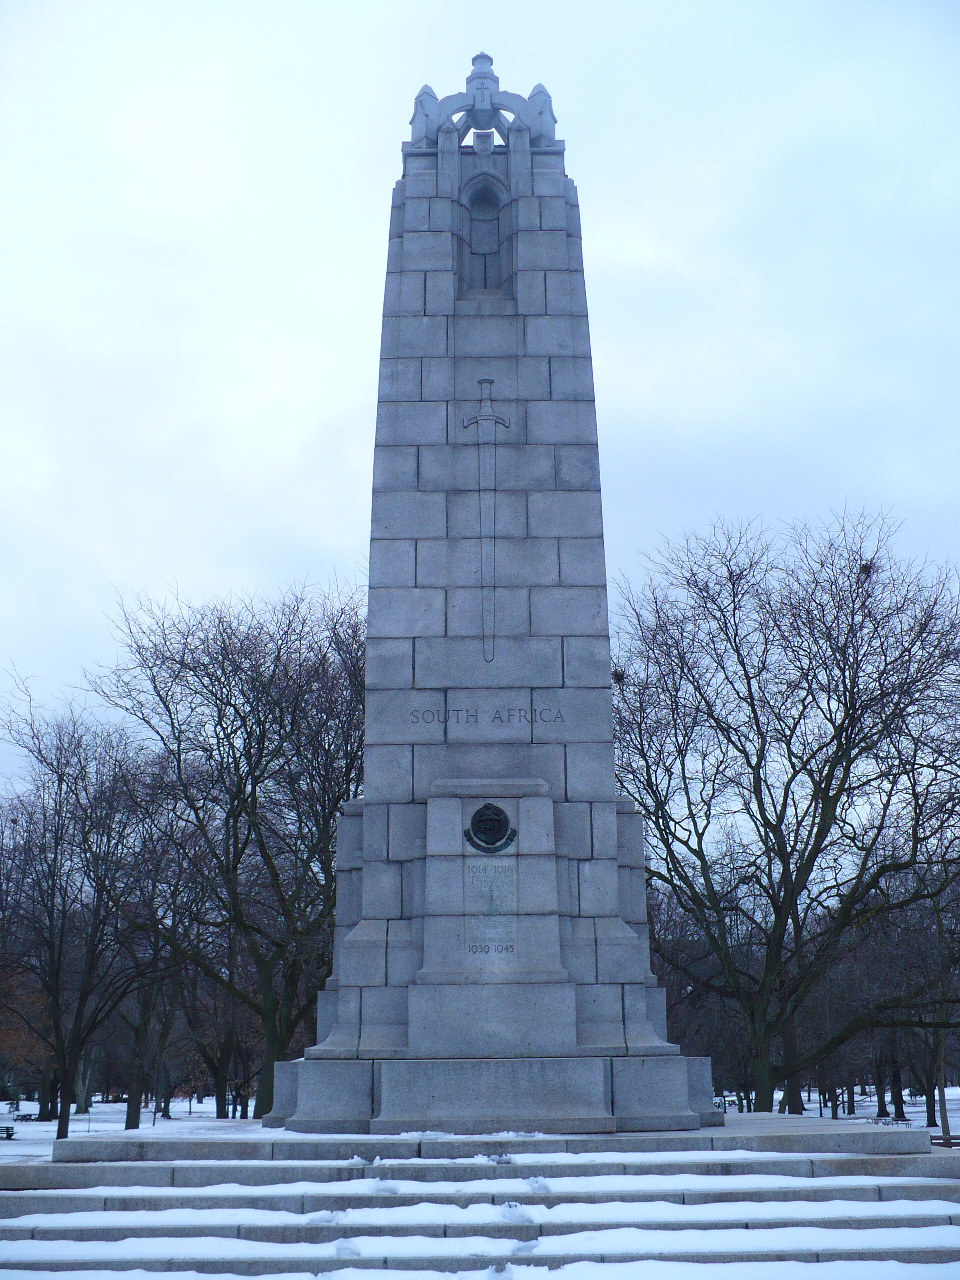 48th Highlanders Regimental Memorial 